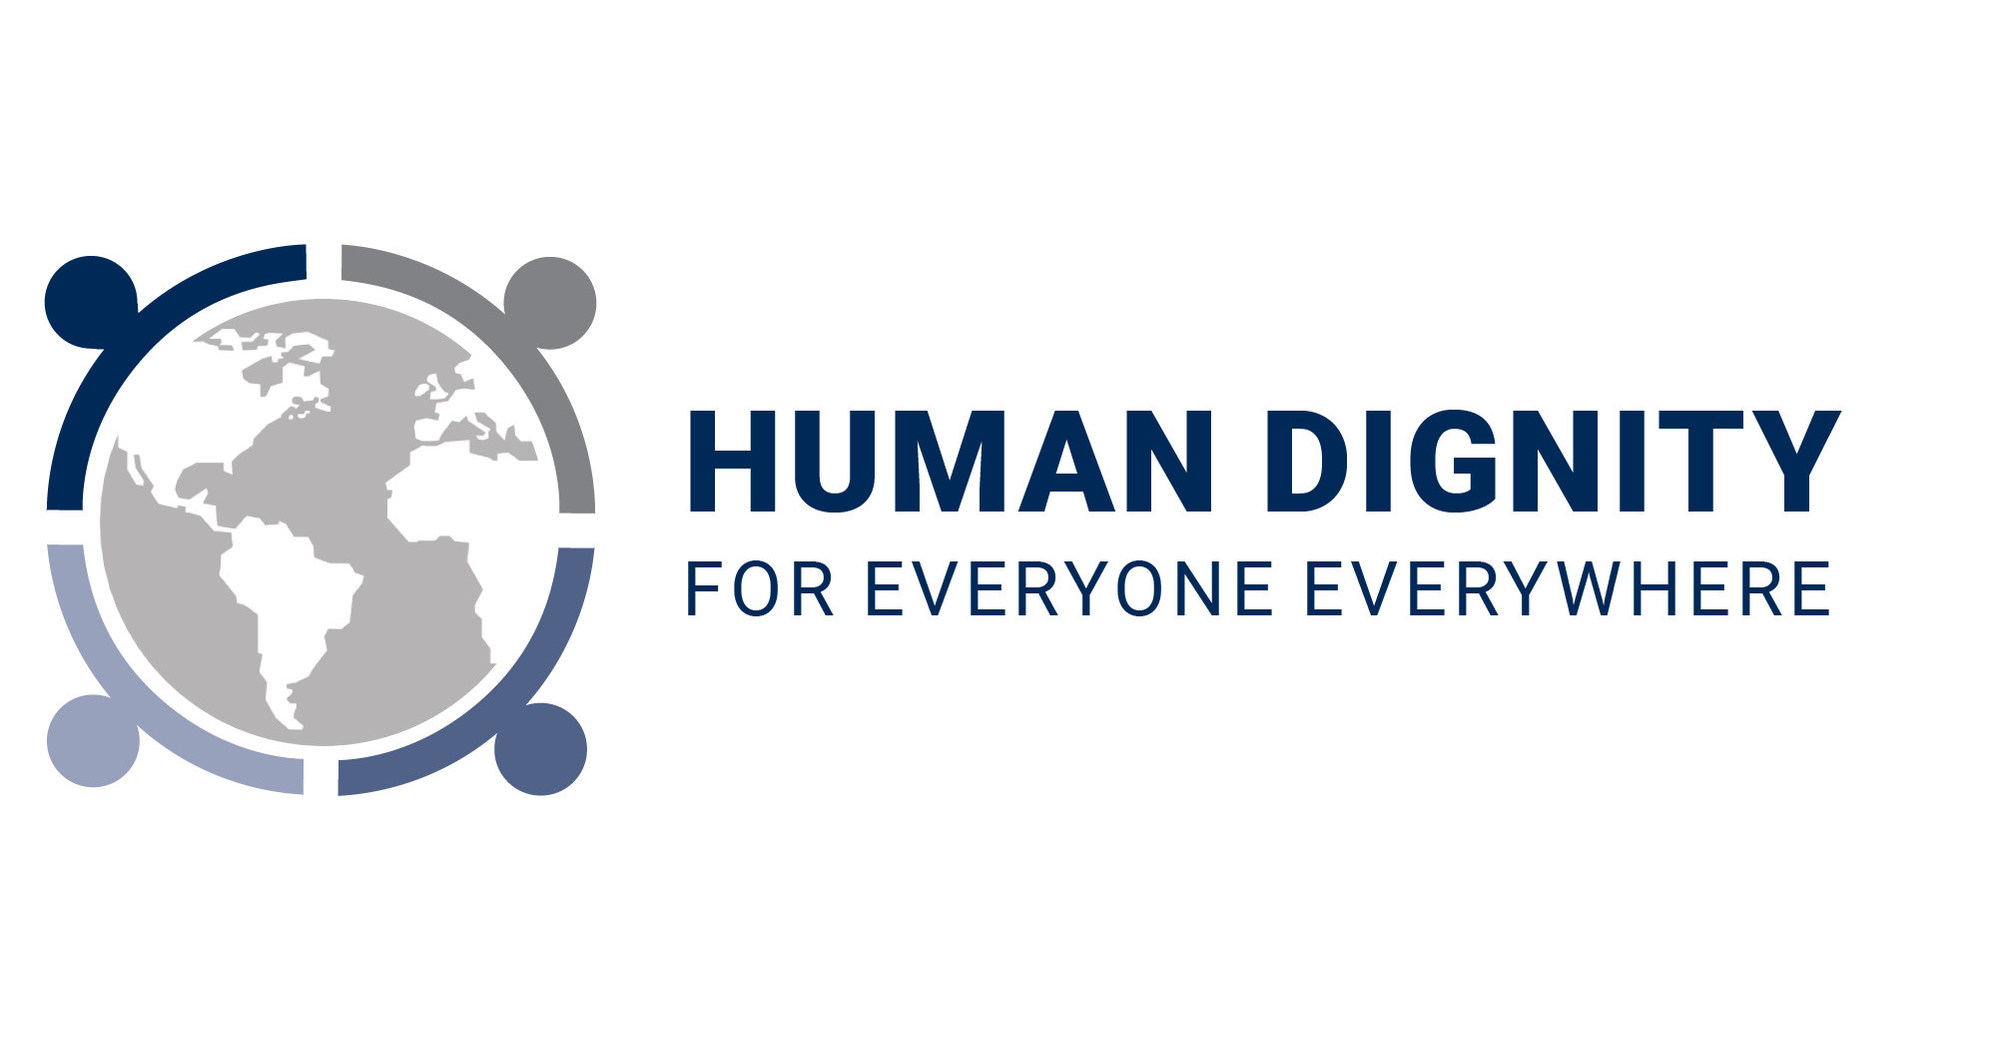 Human Dignity Initiative Announces Landmark Declaration On Human Dignity For Everyone Everywhere